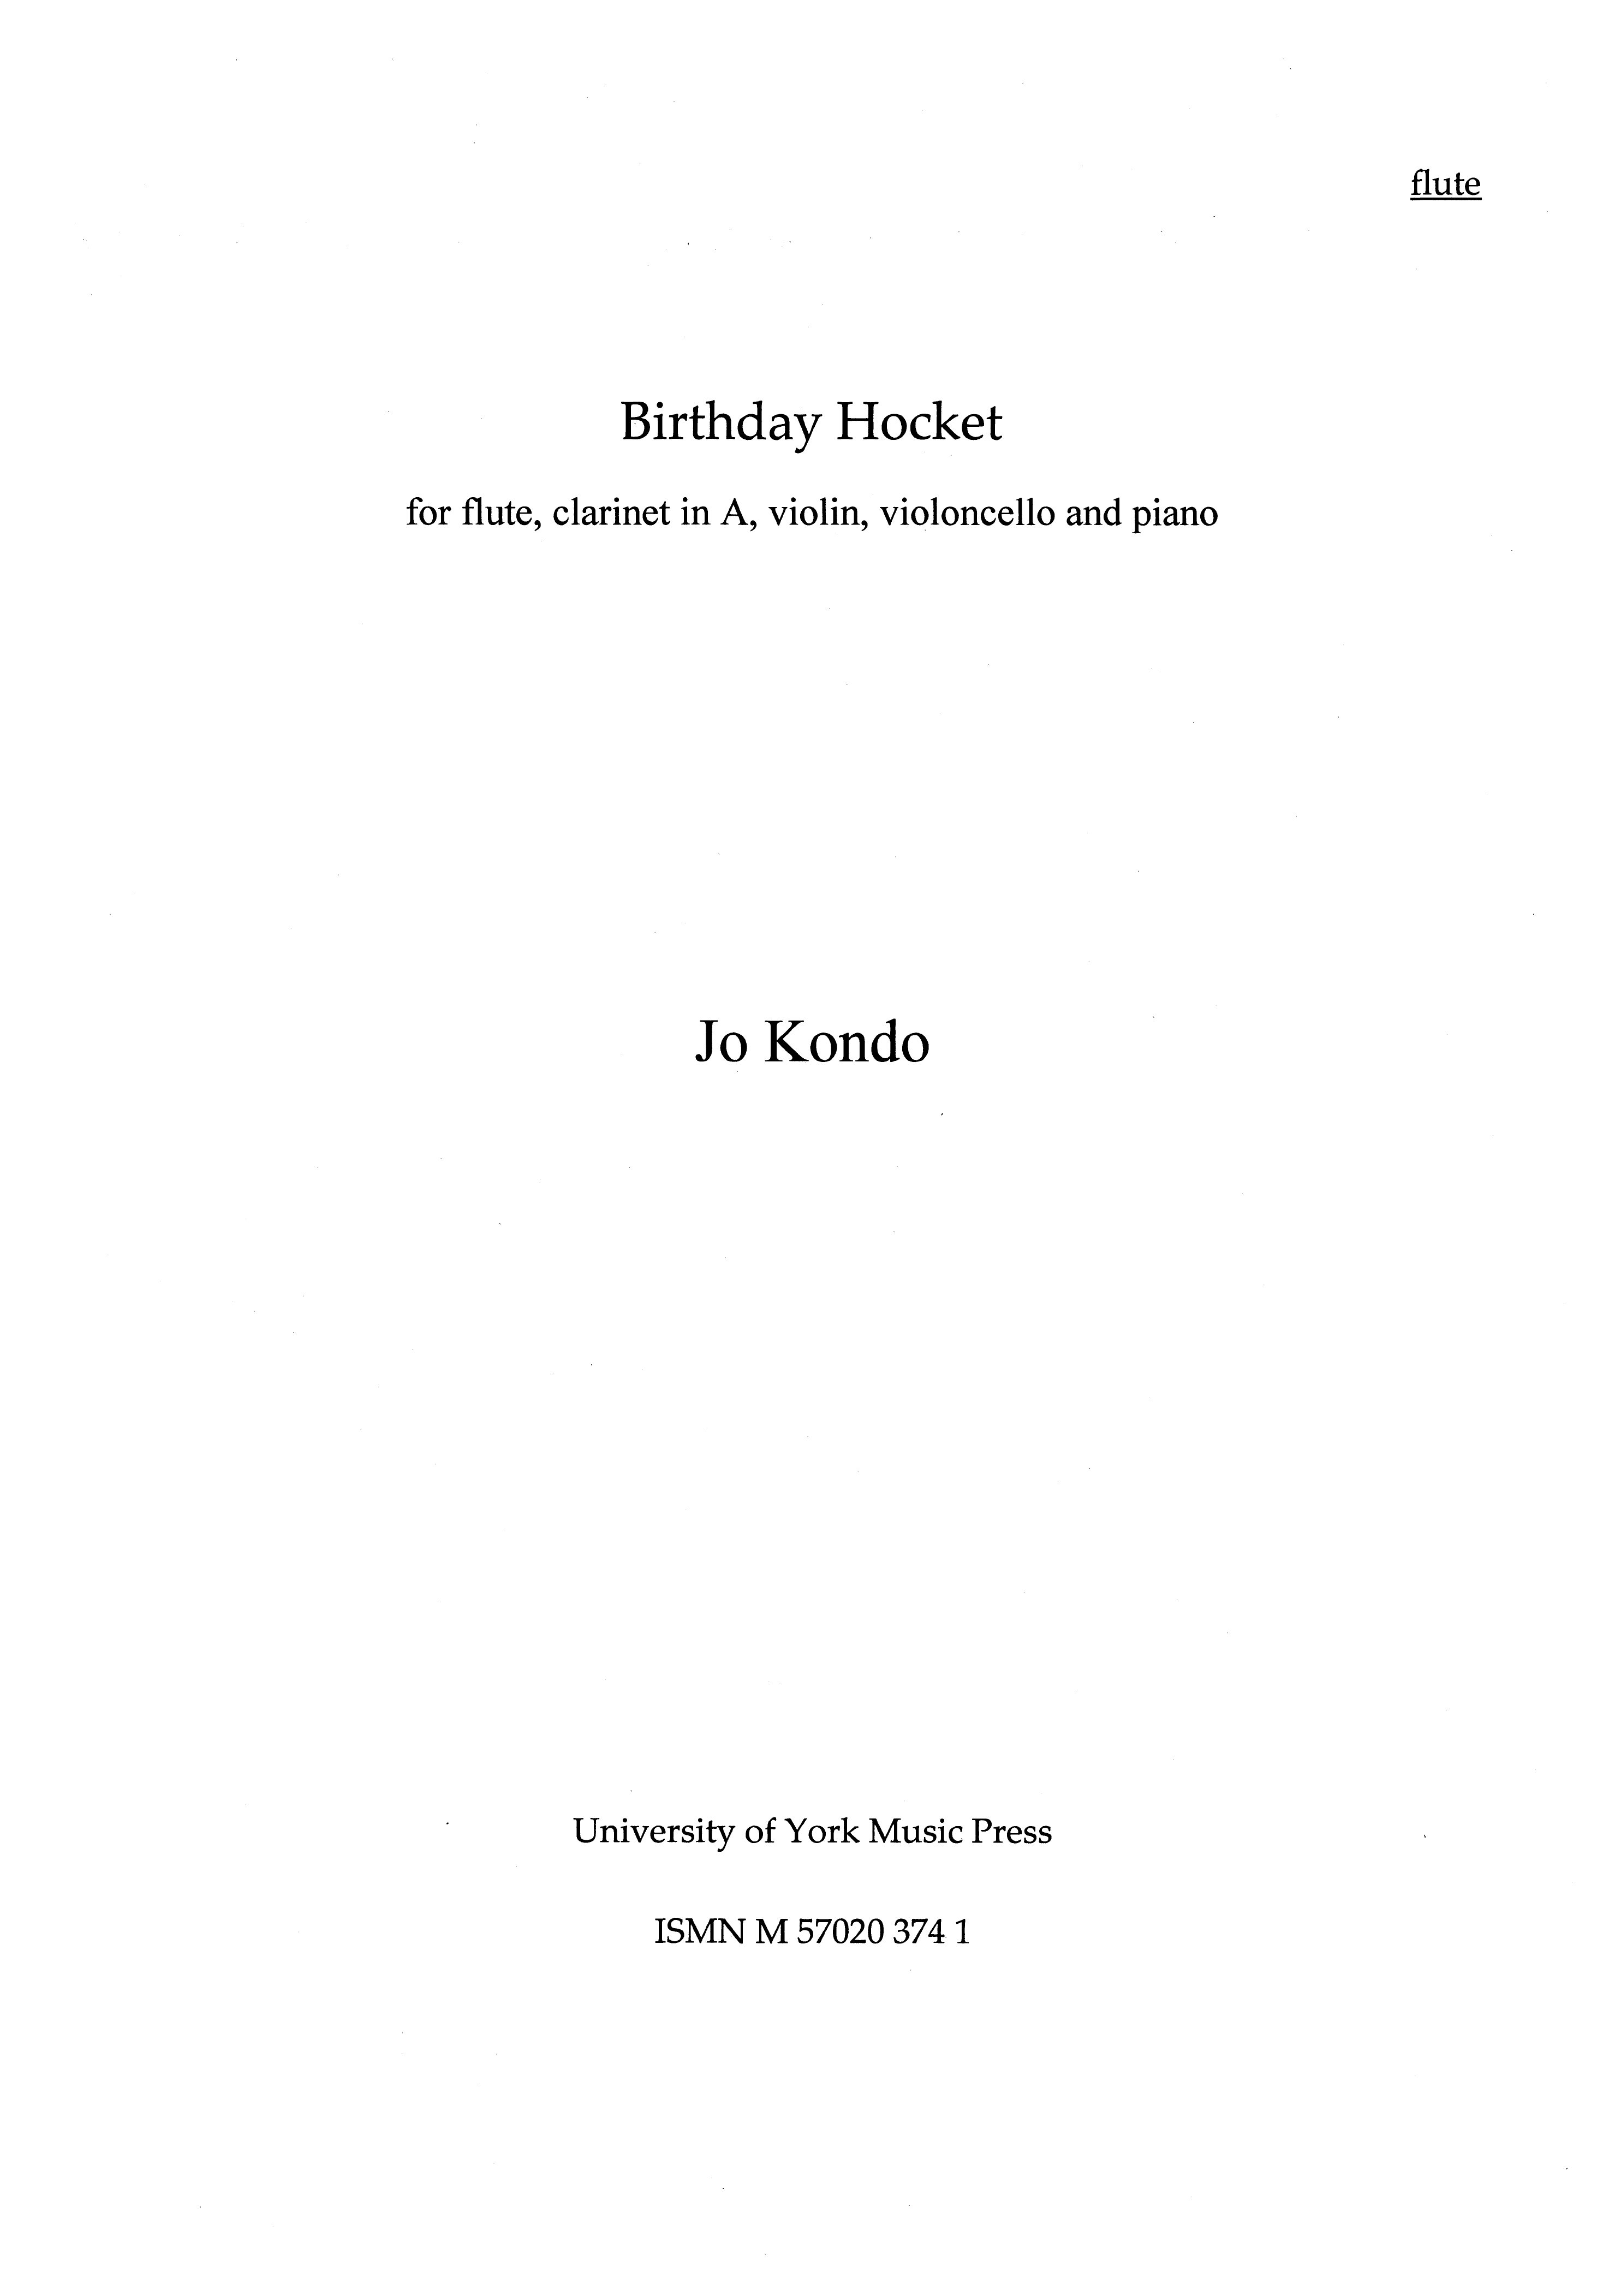 Jo Kondo: Birthday Hocket: Chamber Ensemble: Parts